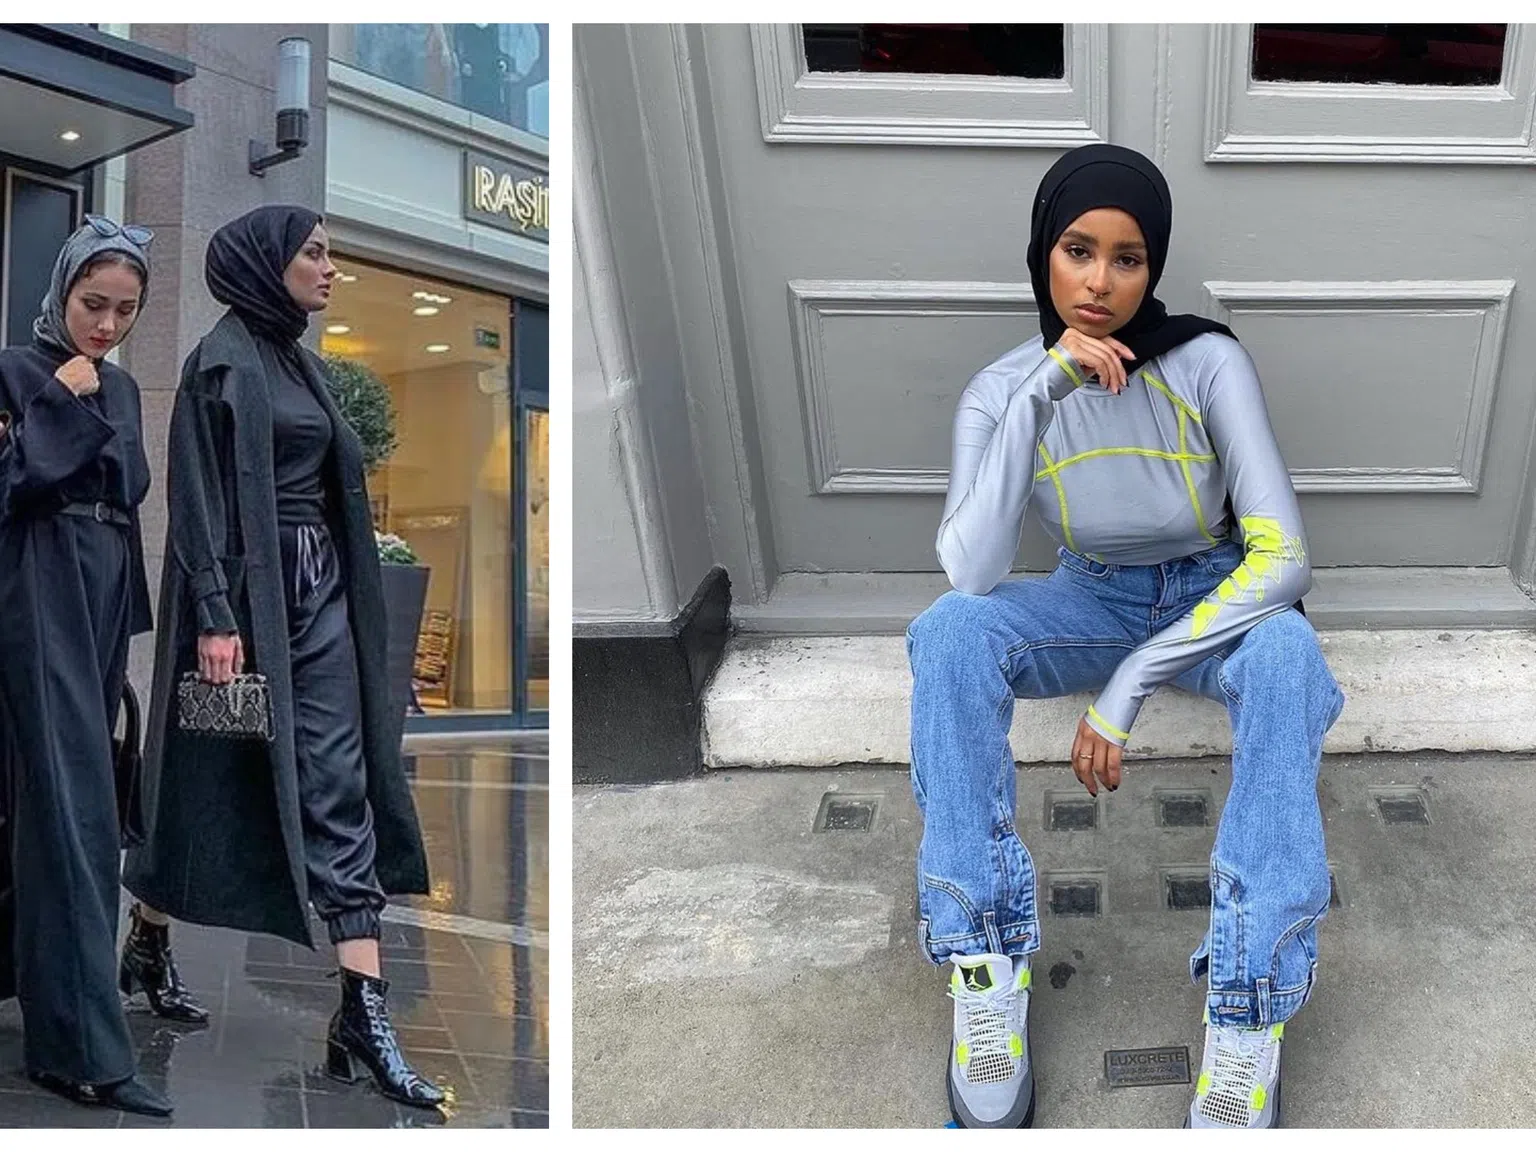 Феноменални красавици с хиджаб шашнаха света. Вижте ги!